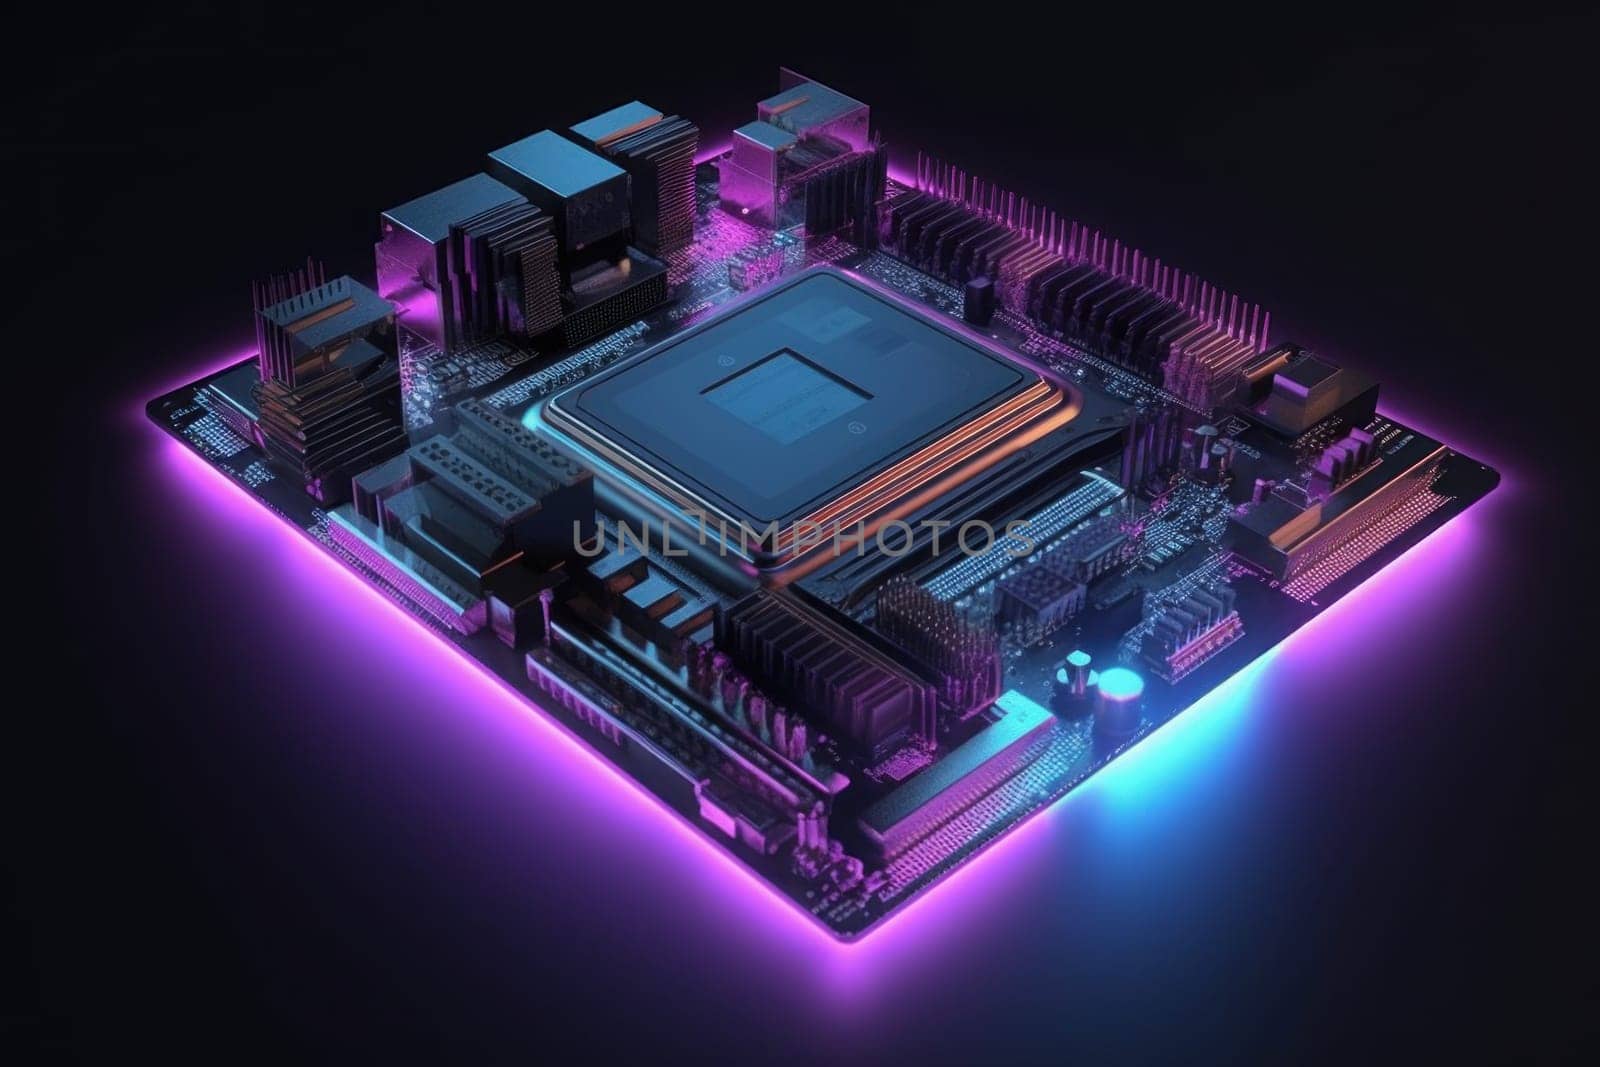 Cpu motherboard neon. Digital hardware. Generate AI